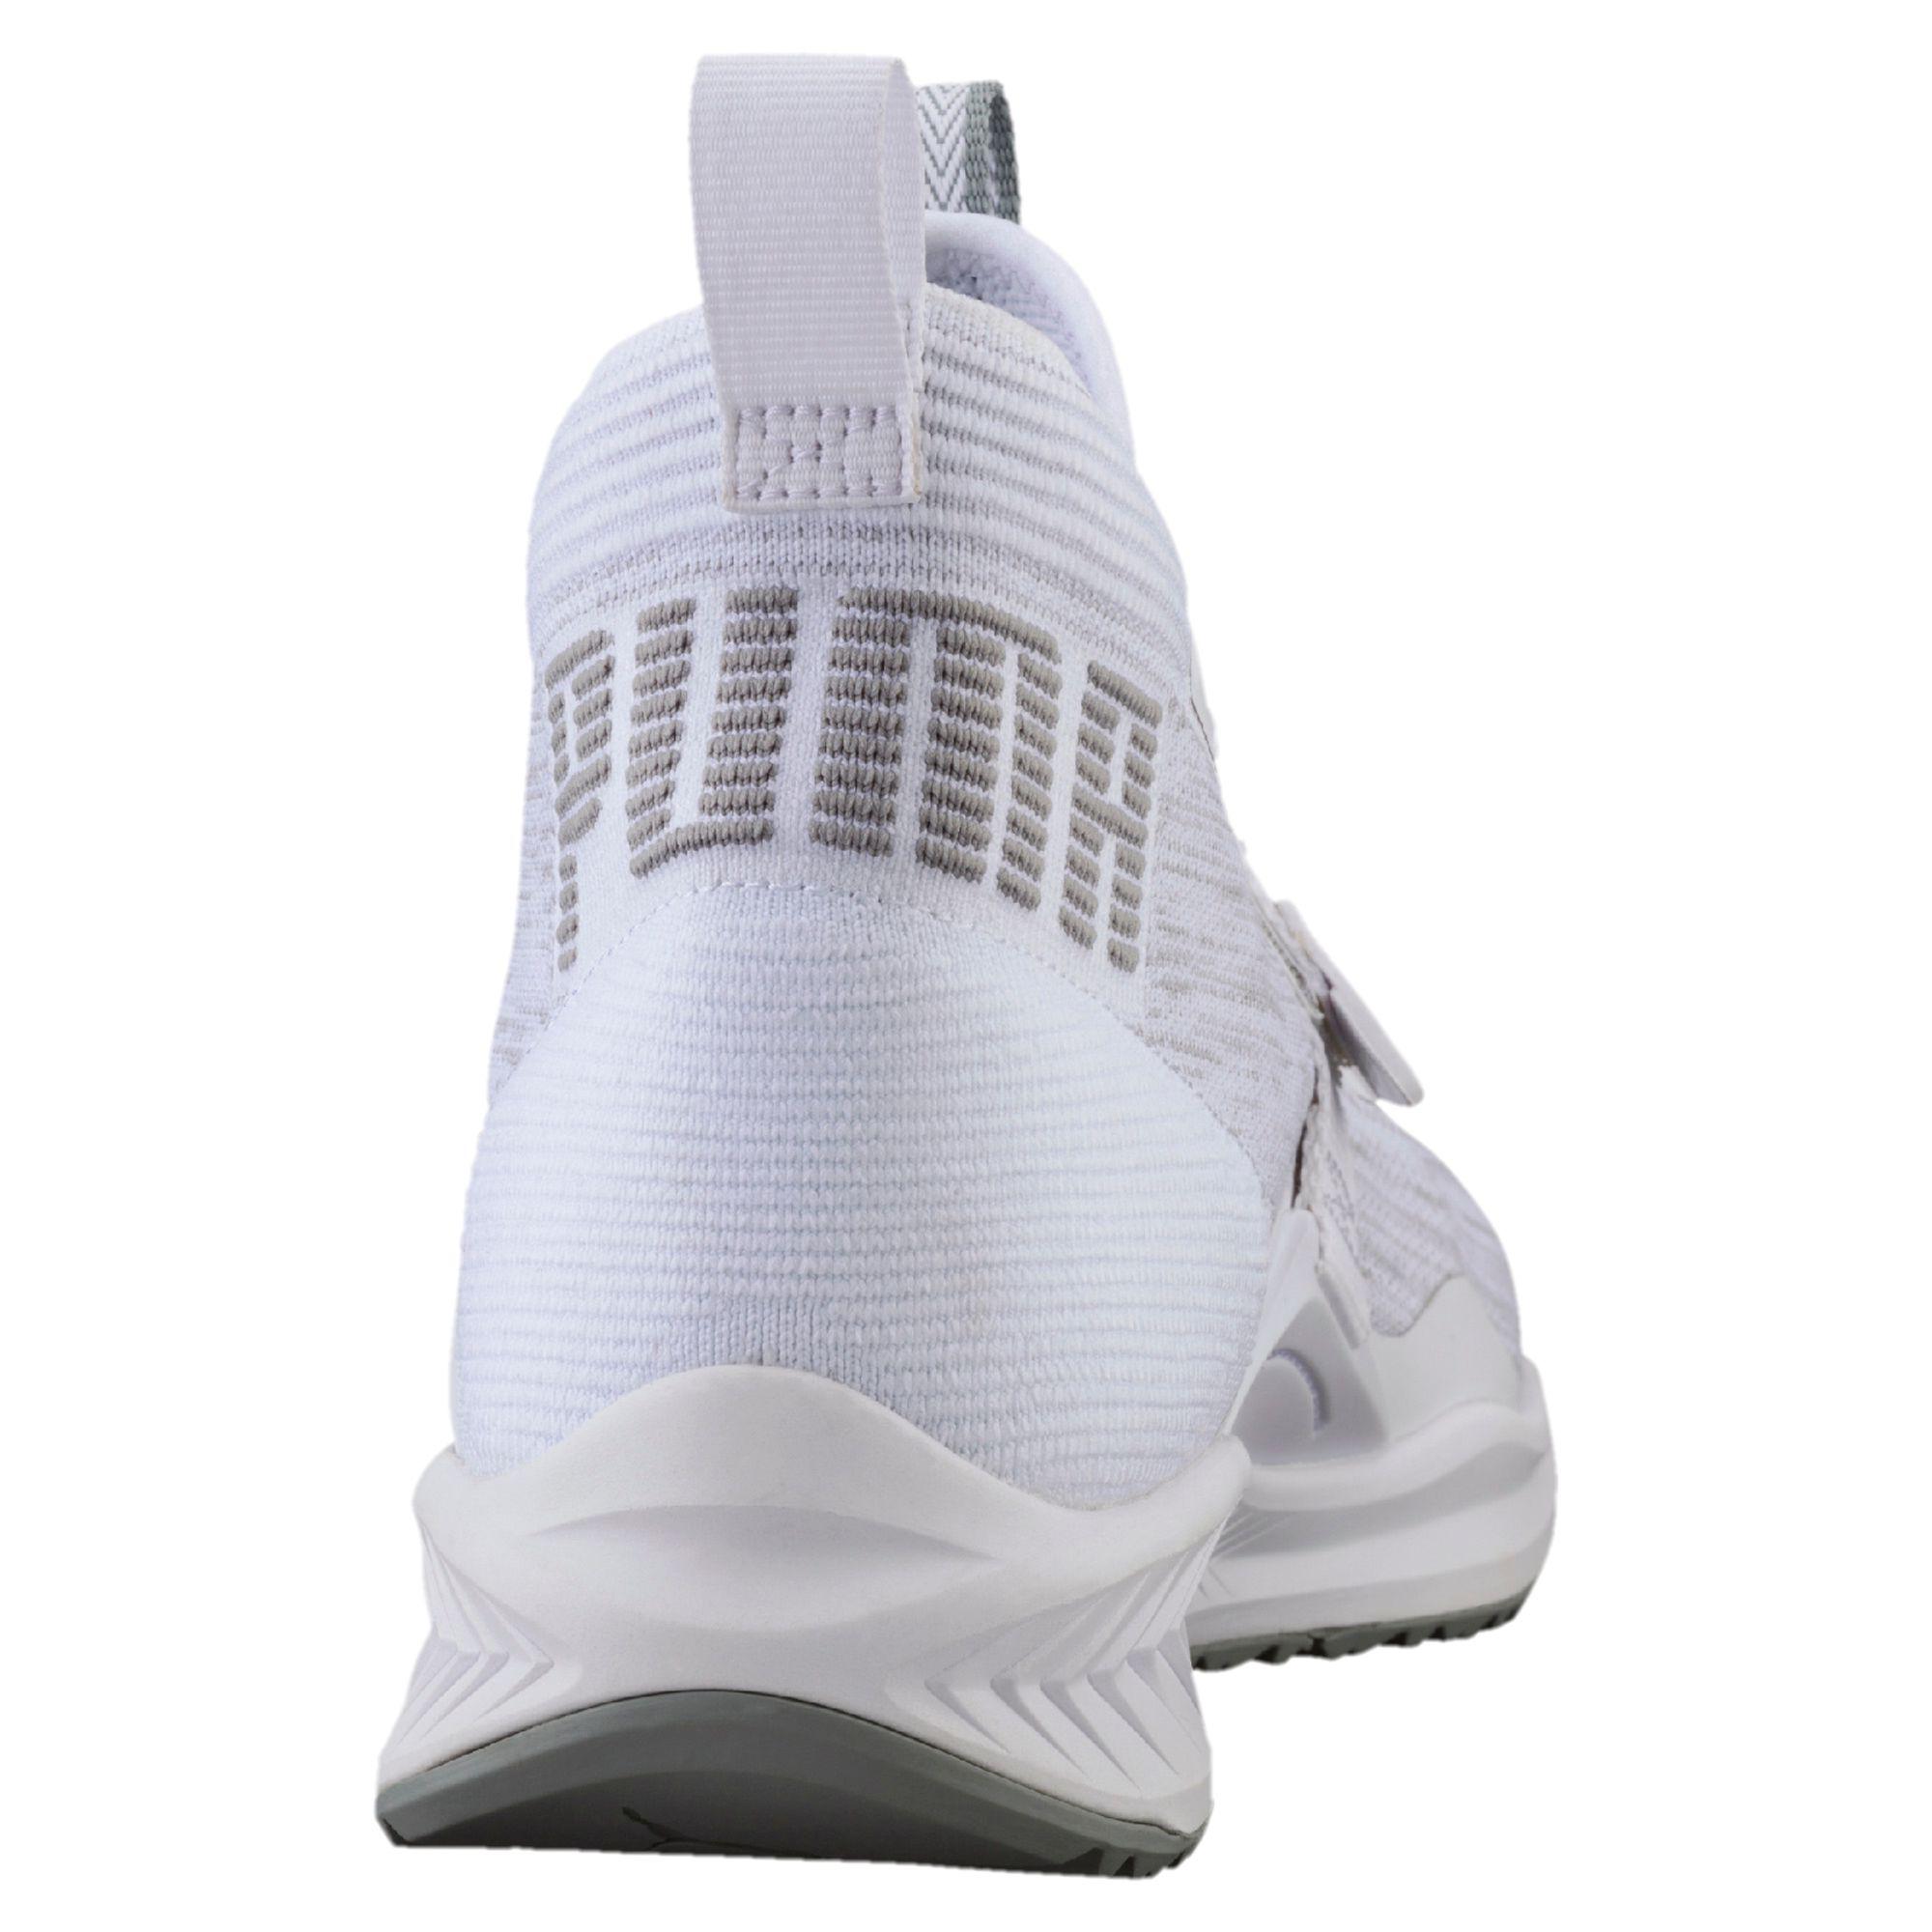 PUMA Rubber Ignite Evoknit 2 Men's Running Shoes in White for Men - Lyst